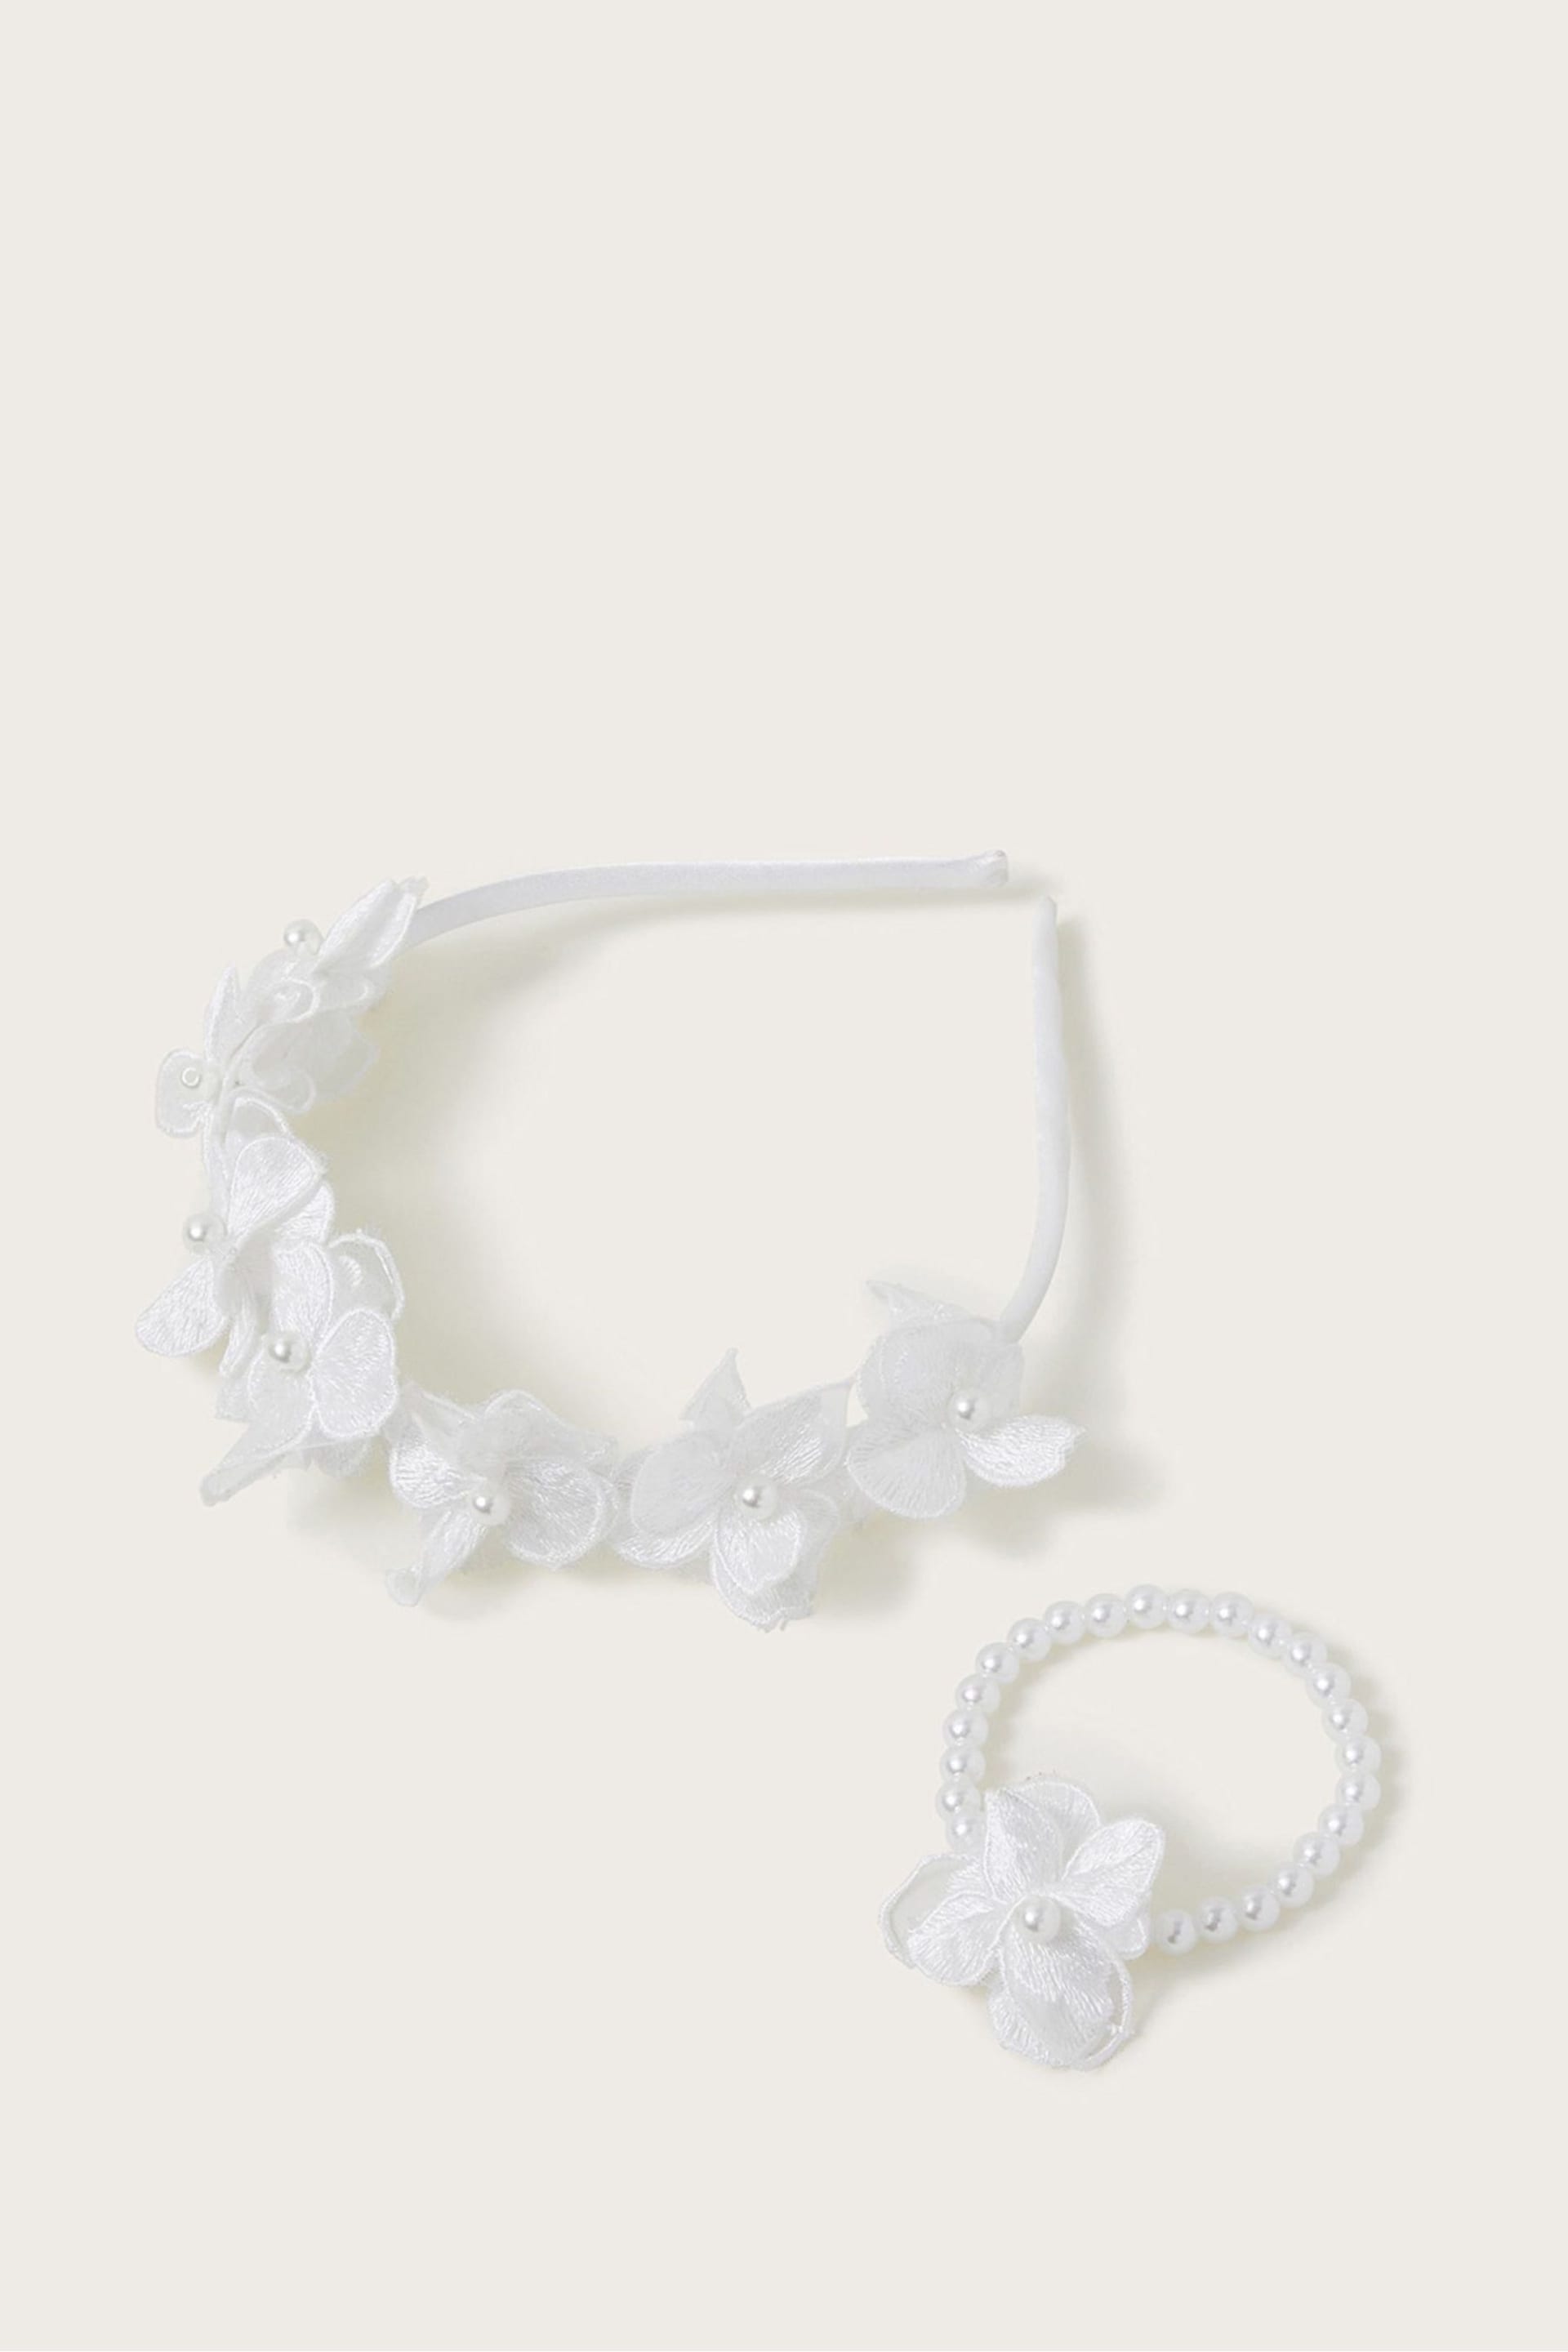 Monsoon Natural Lace Bridesmaid Headband and Bracelet Set - Image 1 of 2